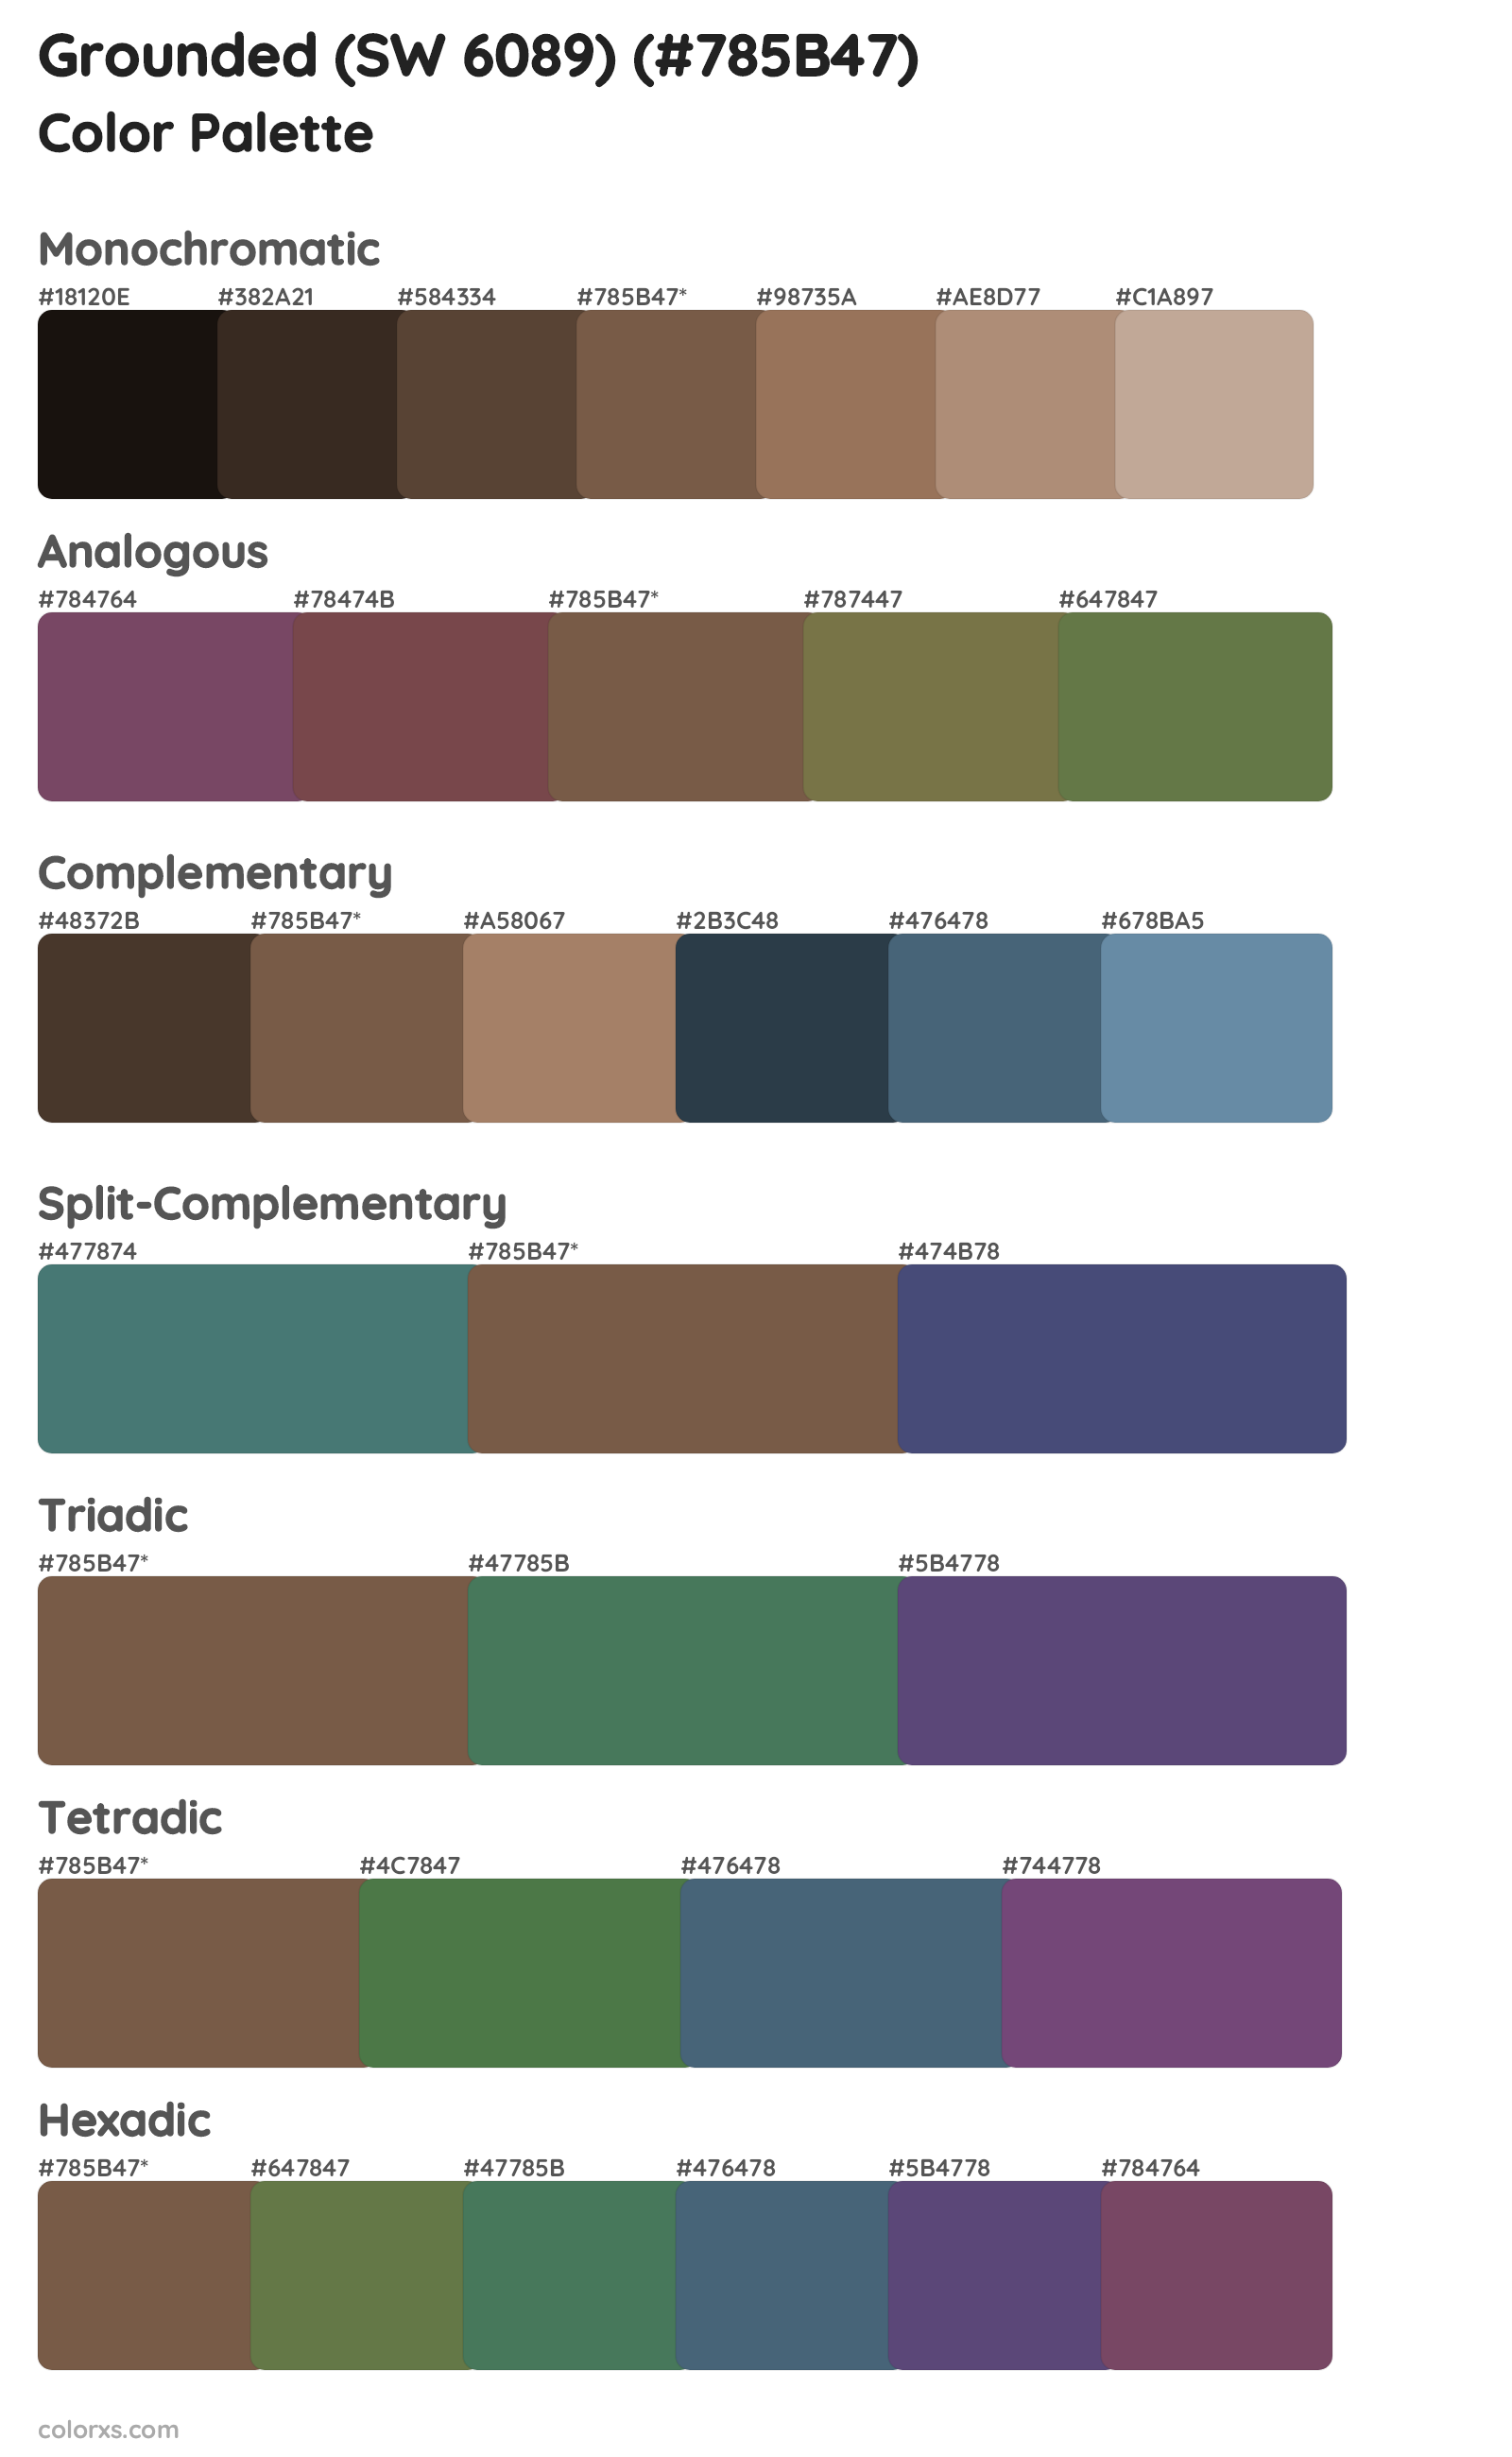 Grounded (SW 6089) Color Scheme Palettes